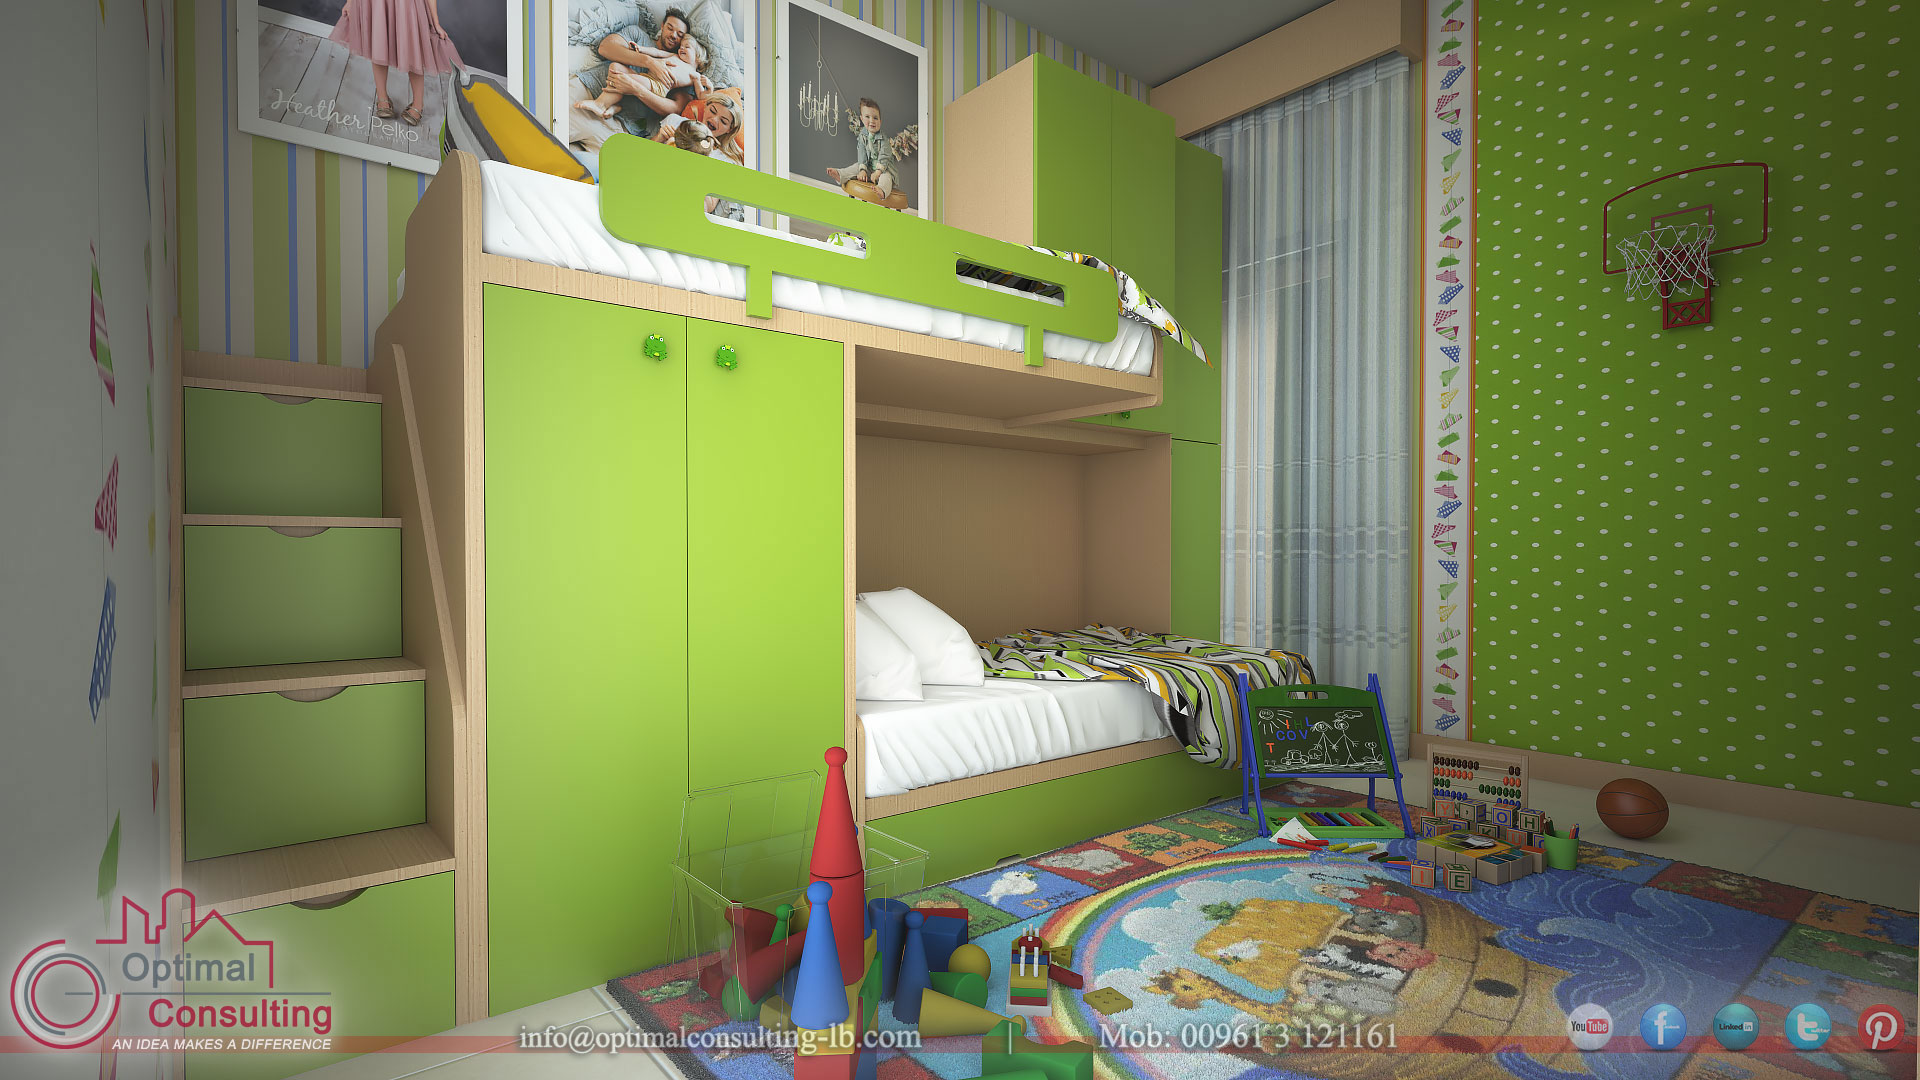 Interior design for a kid's bedroom in beirut lebanon.